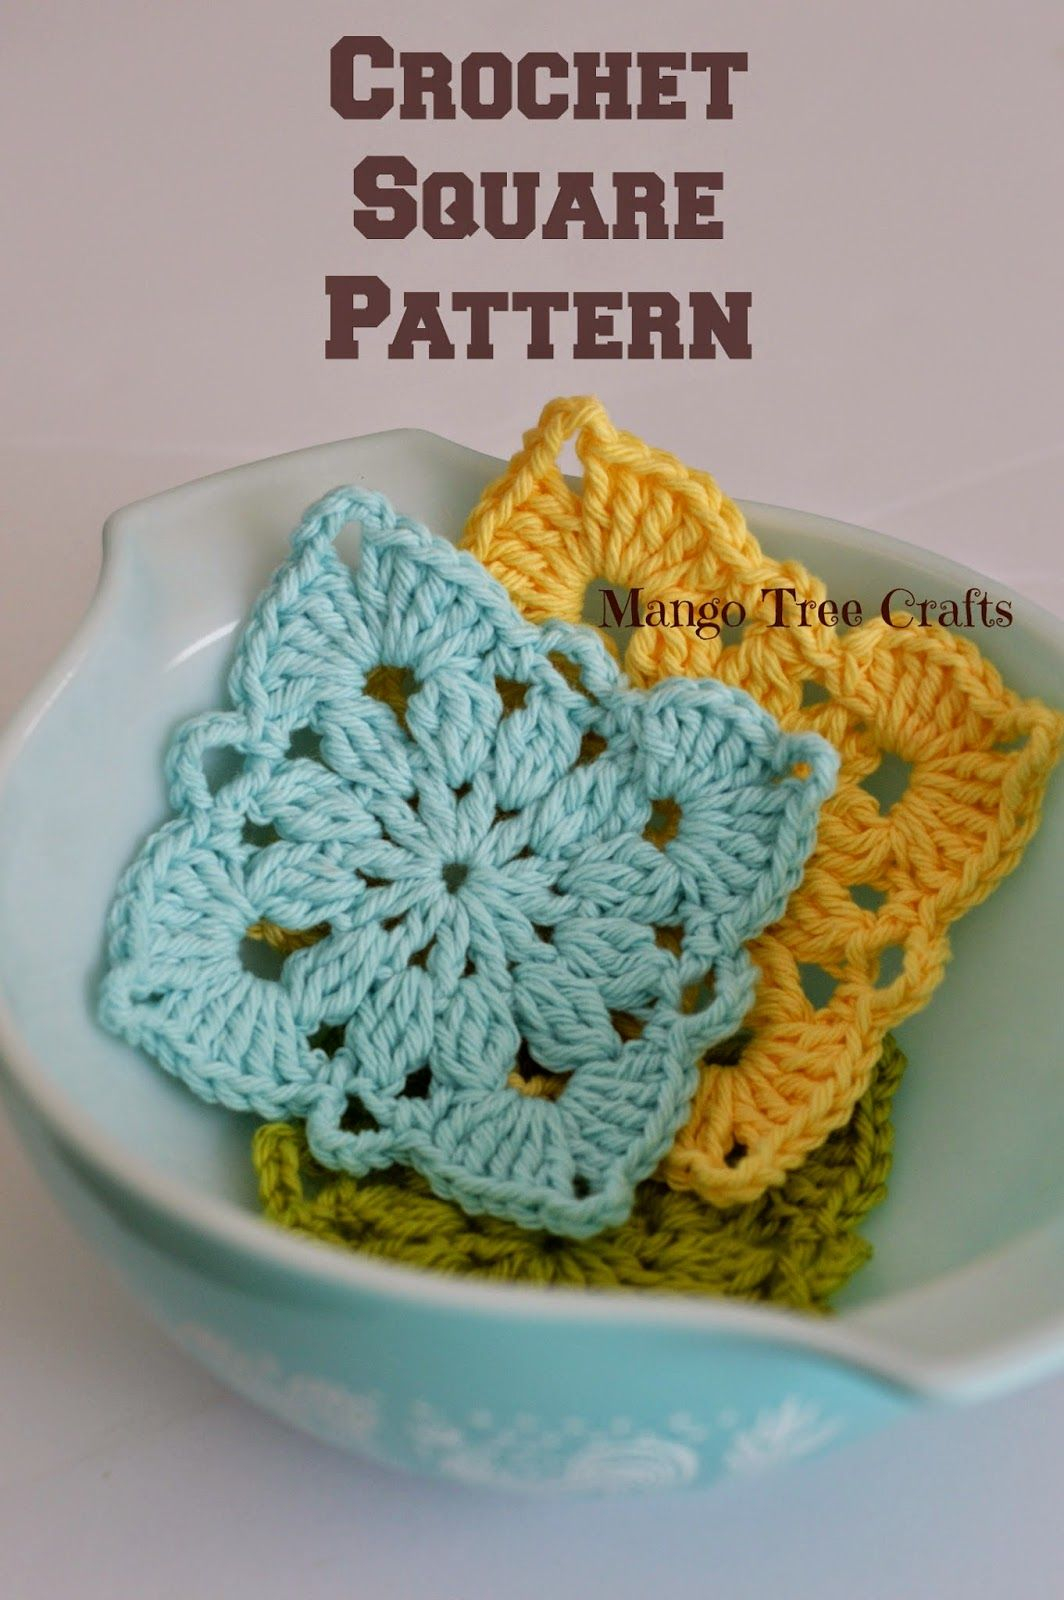 Motif Patterns Crochet Mango Tree Crafts Crochet Square Pattern And Photo Tutorial